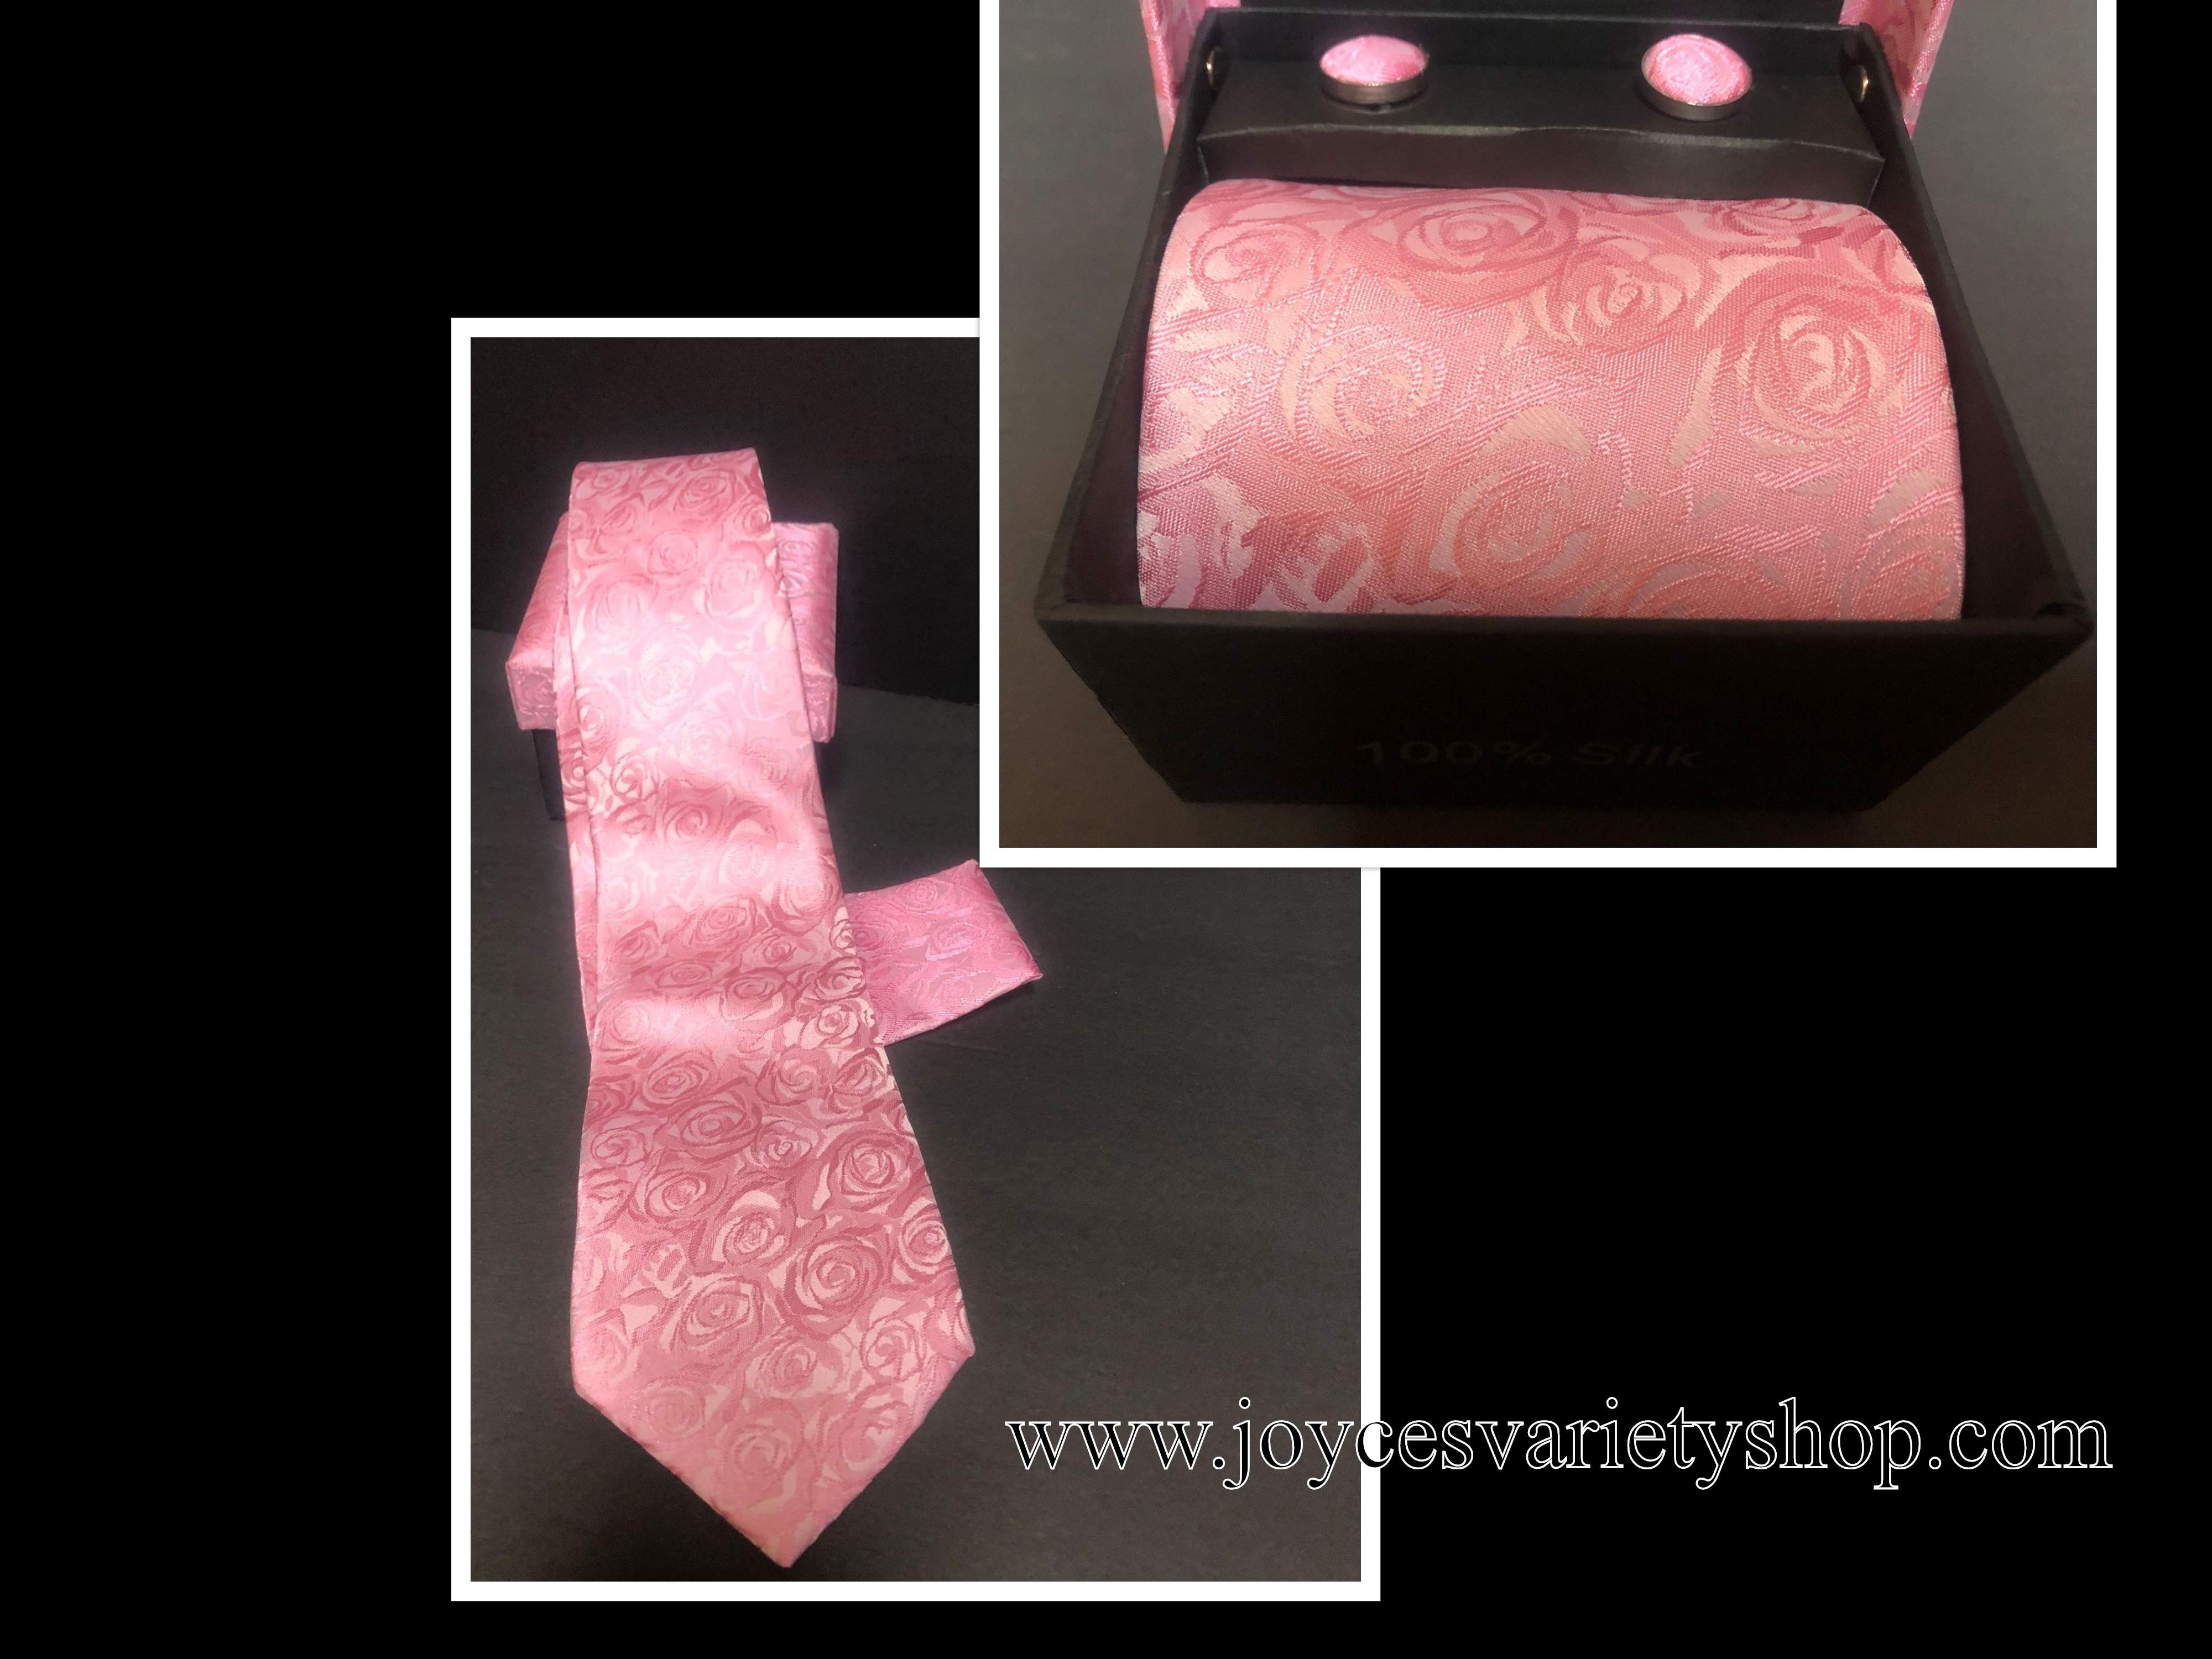 100% Silk Tie Cuff-links Pocket Square Set Pink Floral